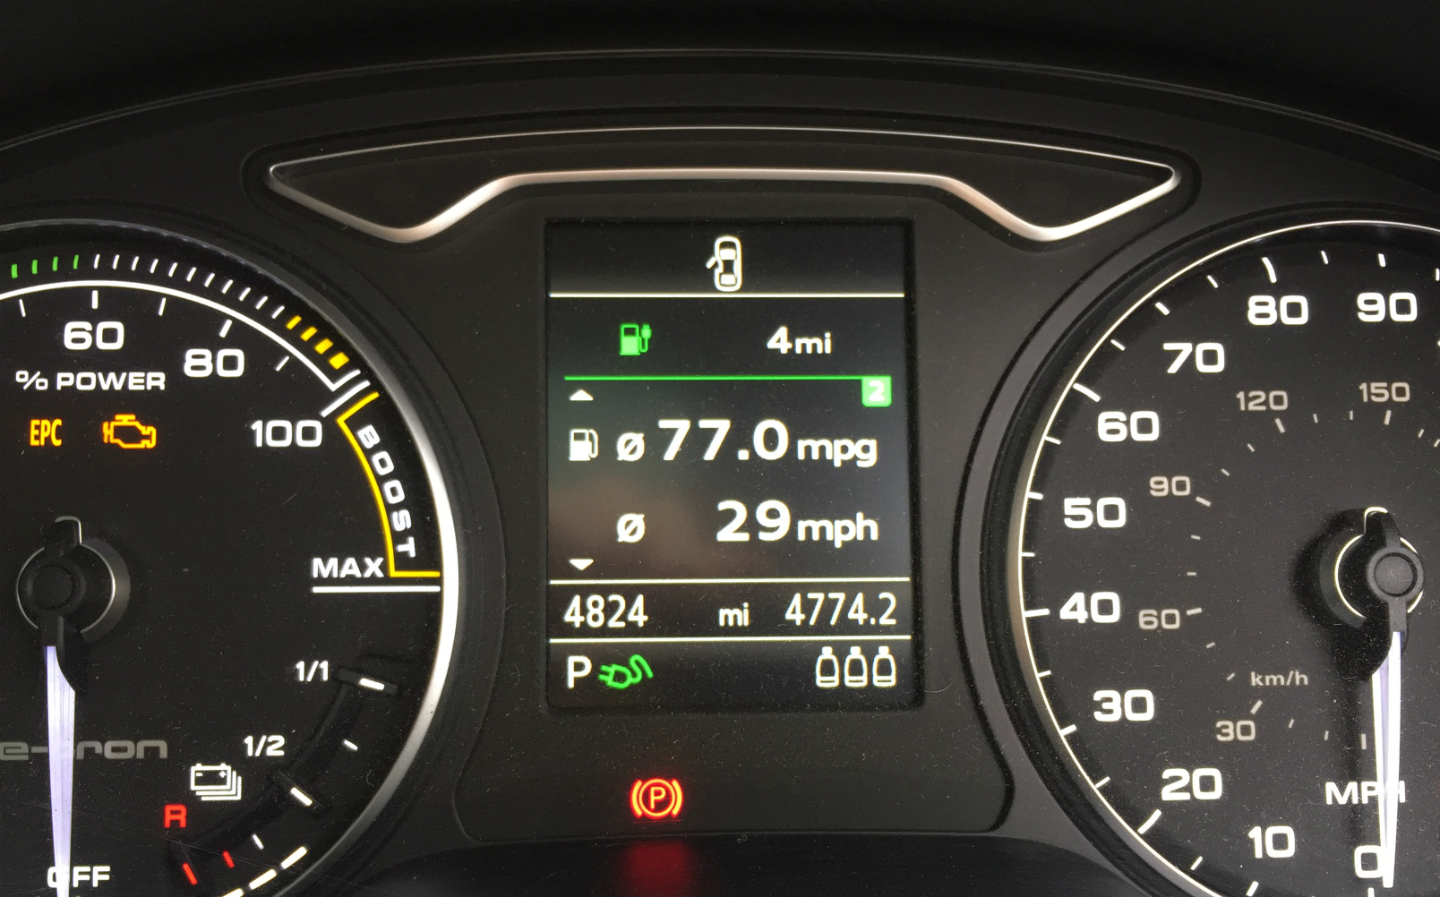 The true fuel consumption of an Audi A3 e-tron PHEV